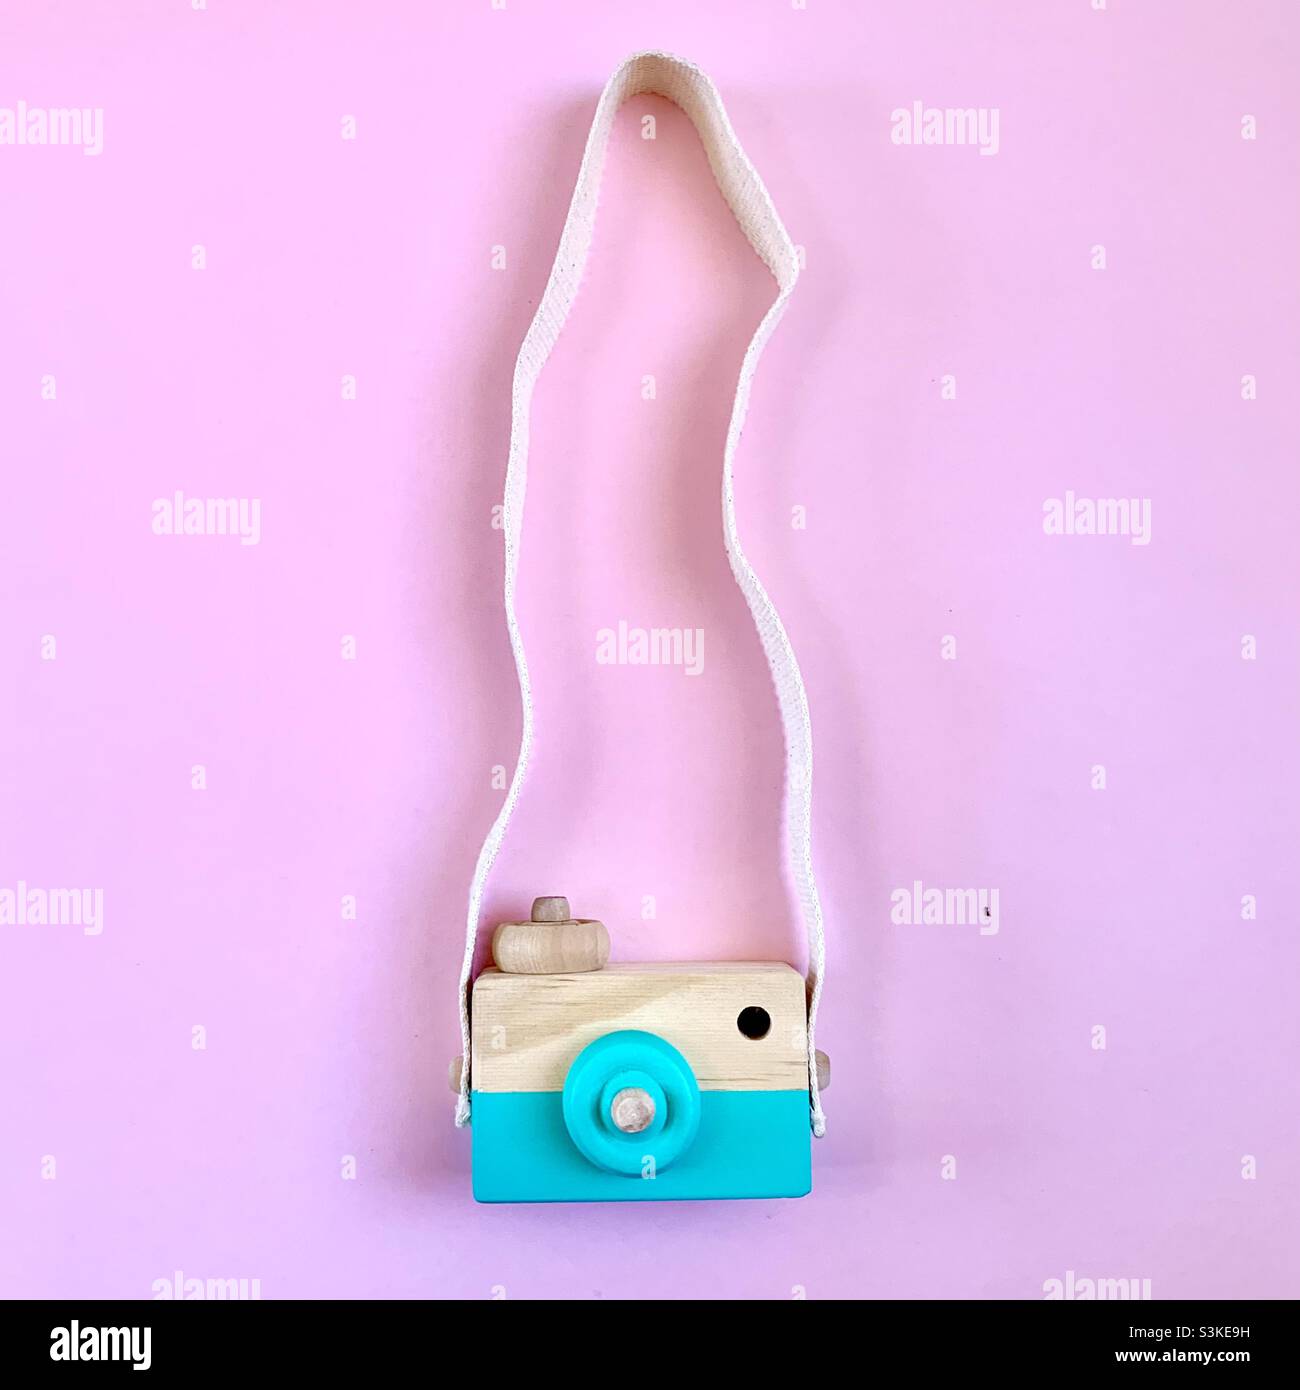 Toy photo camera on pink background Stock Photo